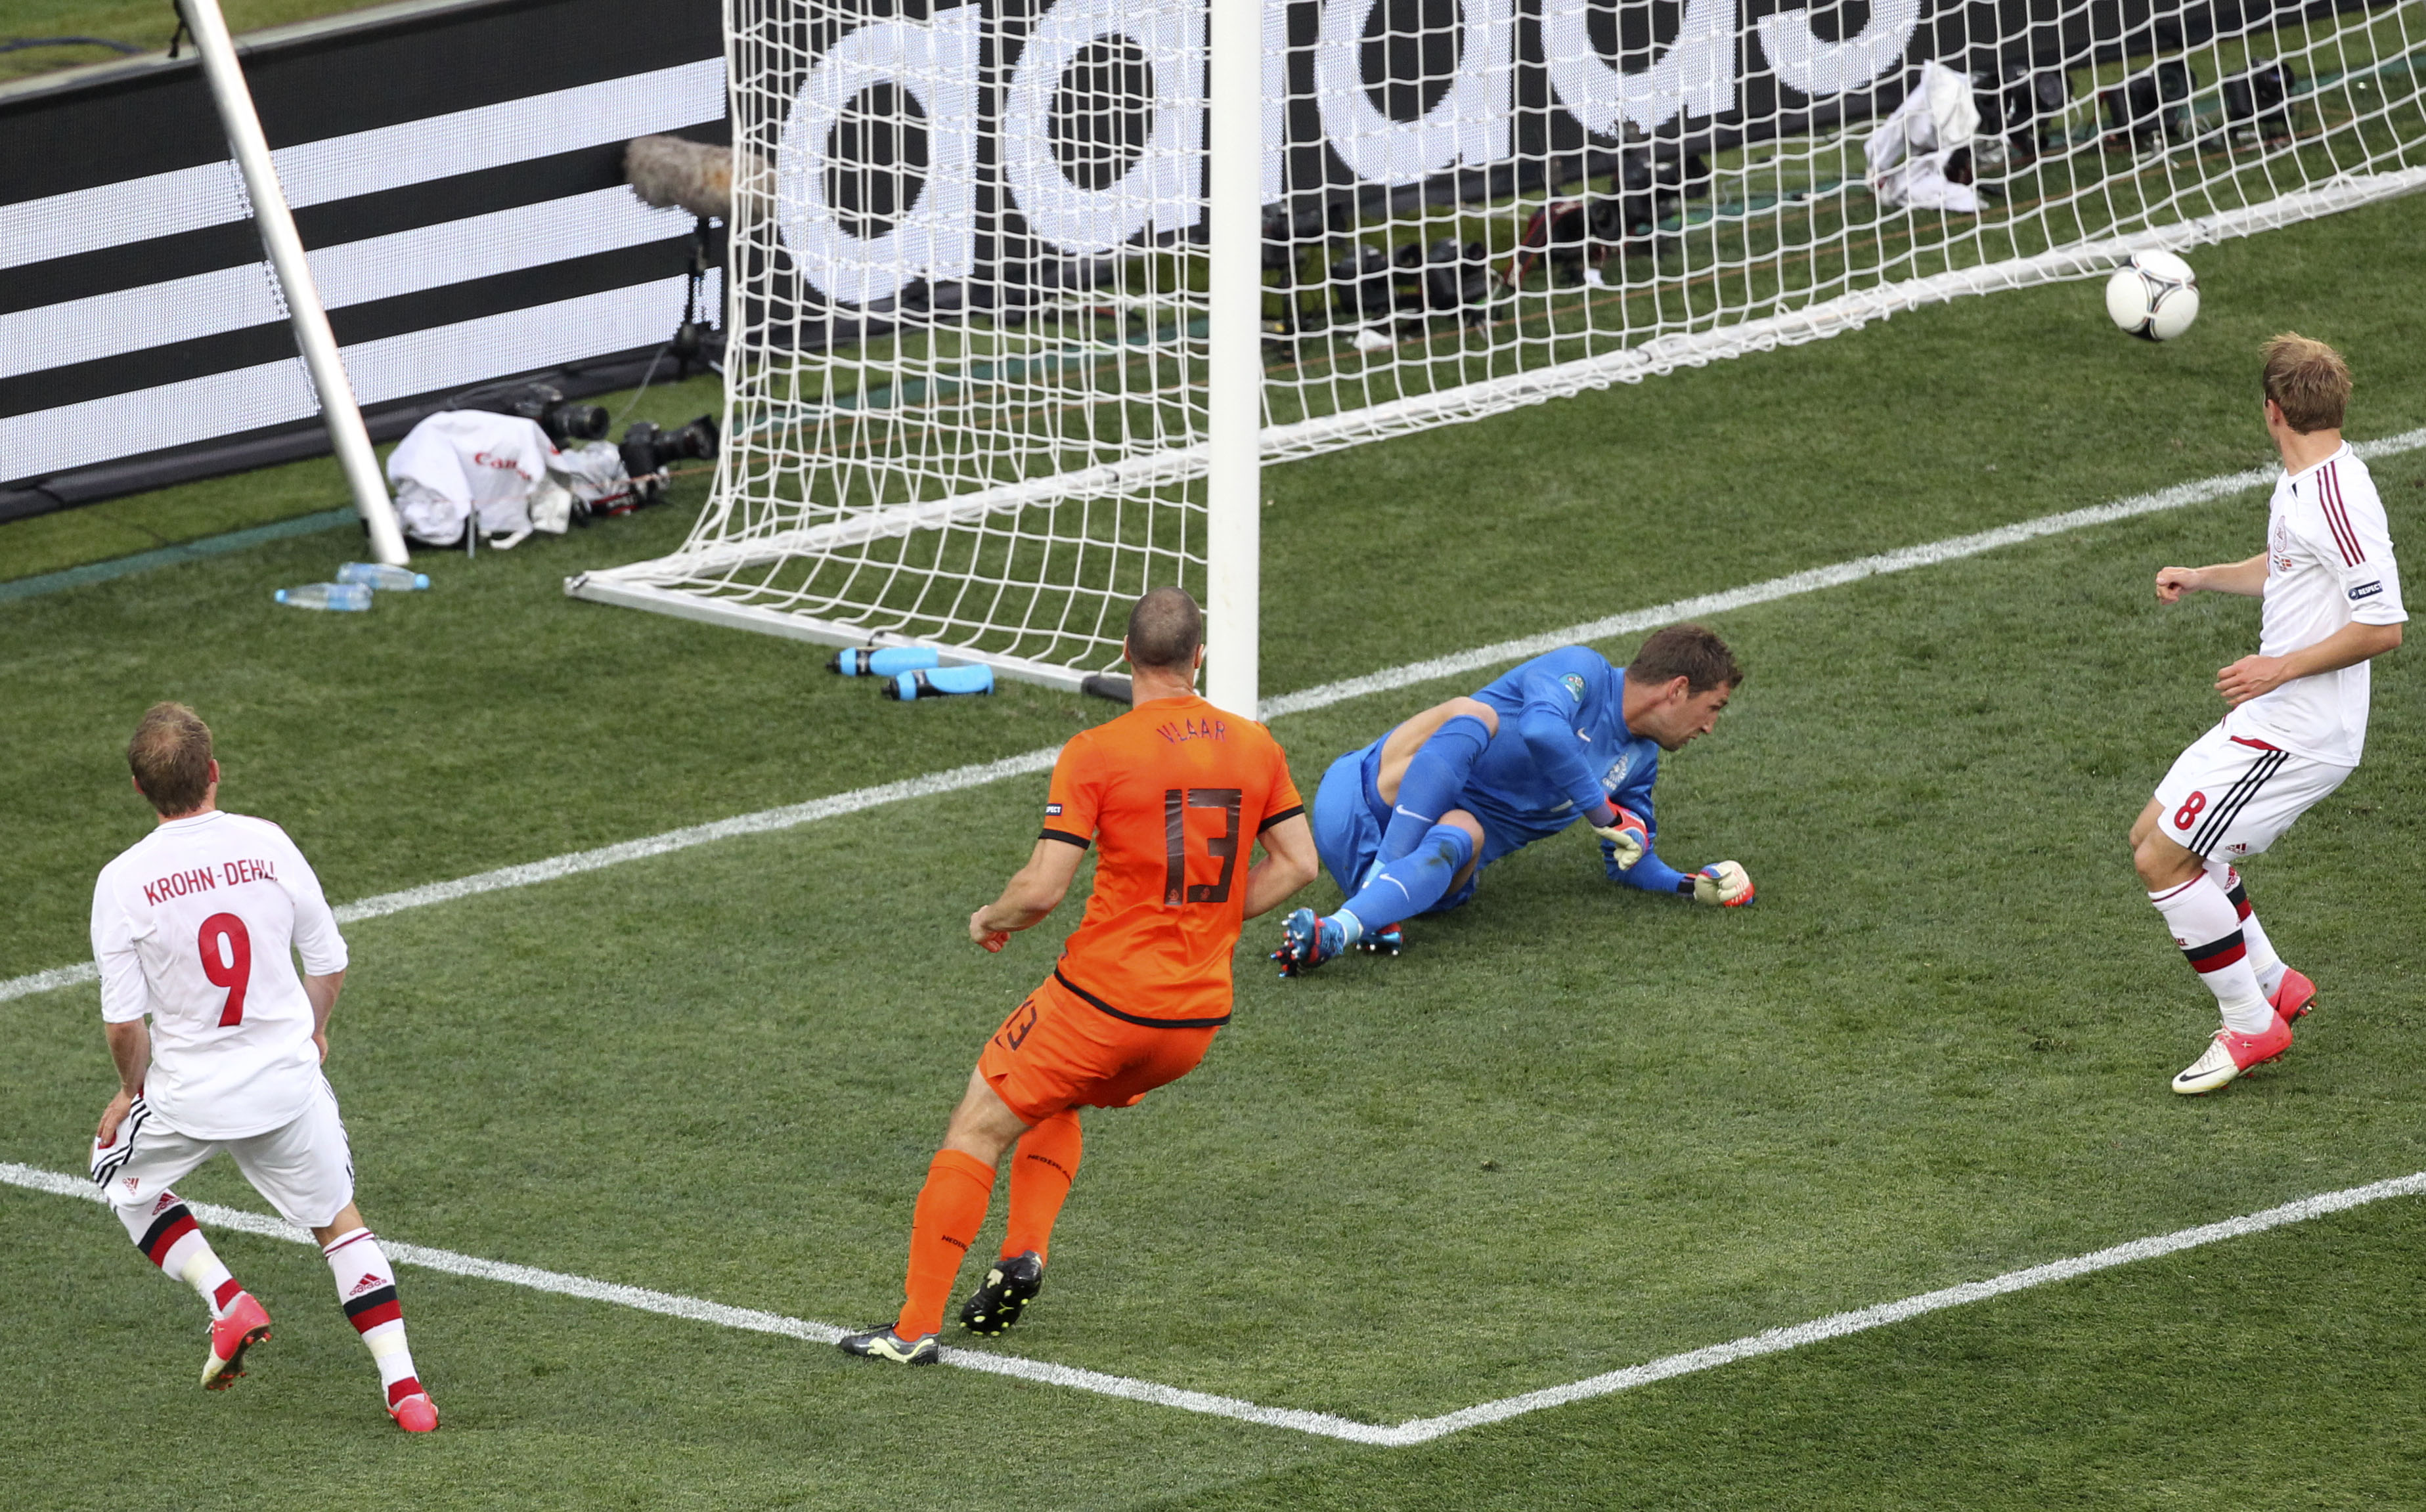 Bredsidan slank in mellan benen på Hollands målvakt Maarten Stekelenburg.